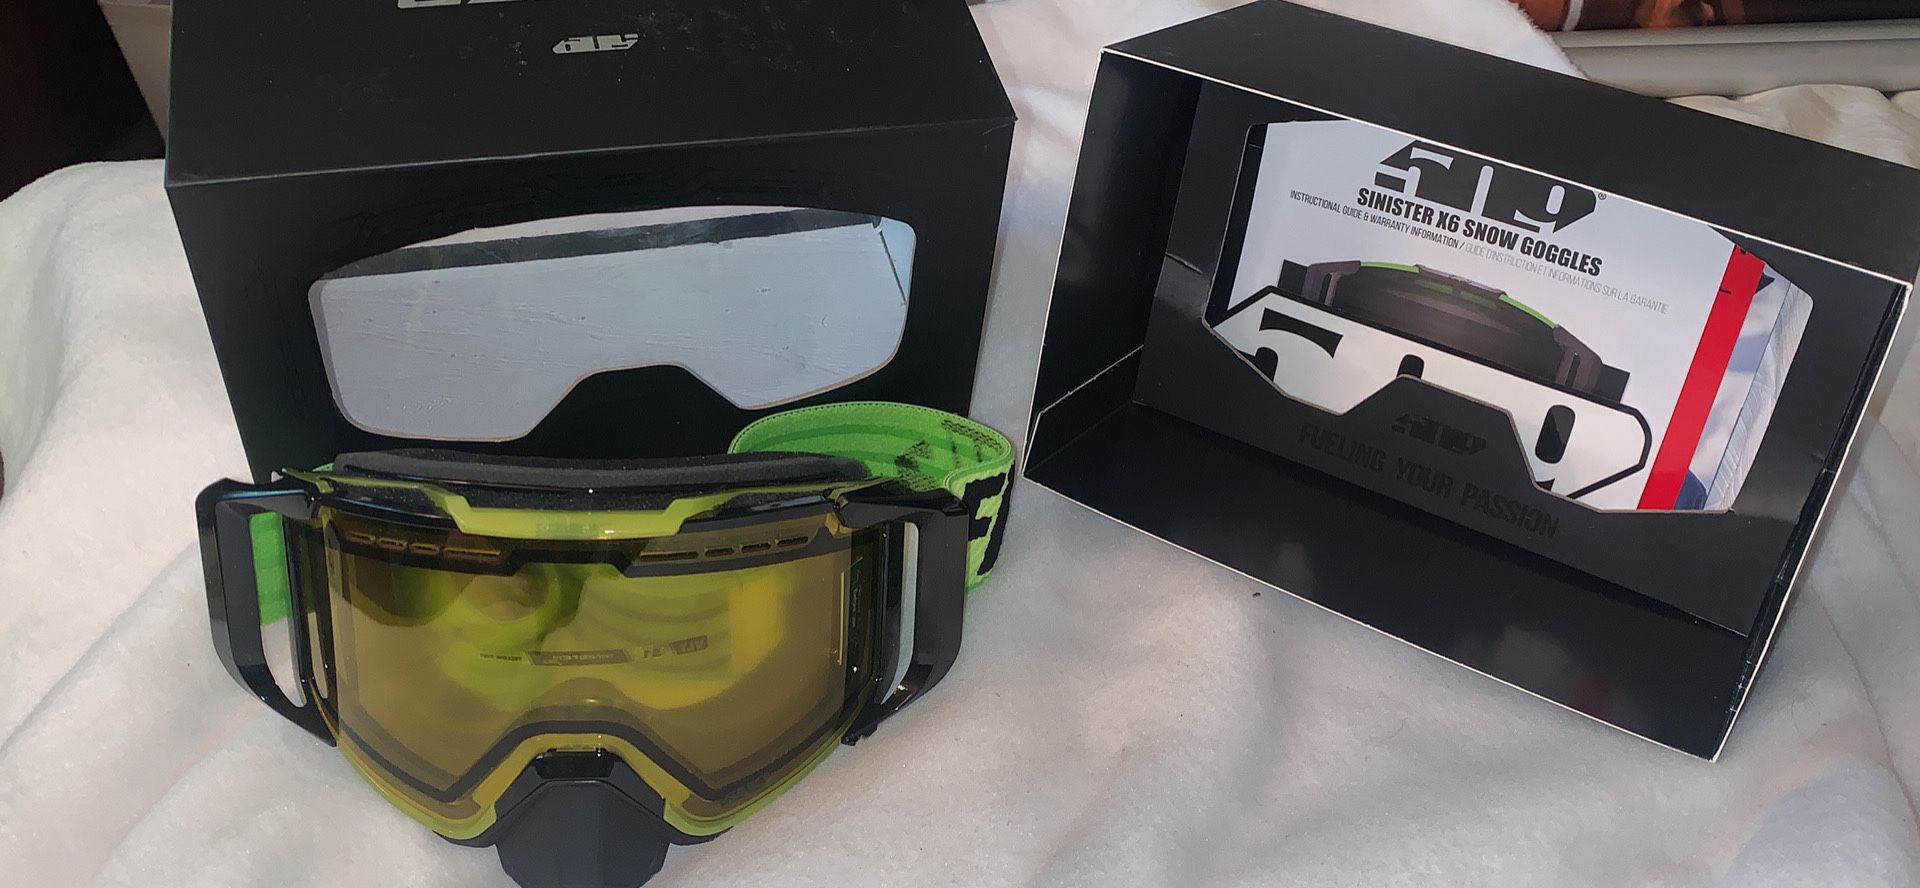 509 SINISTER X6 Goggles Phantom Rigid Frame High Vision, Lime Green, NEW, Never Used